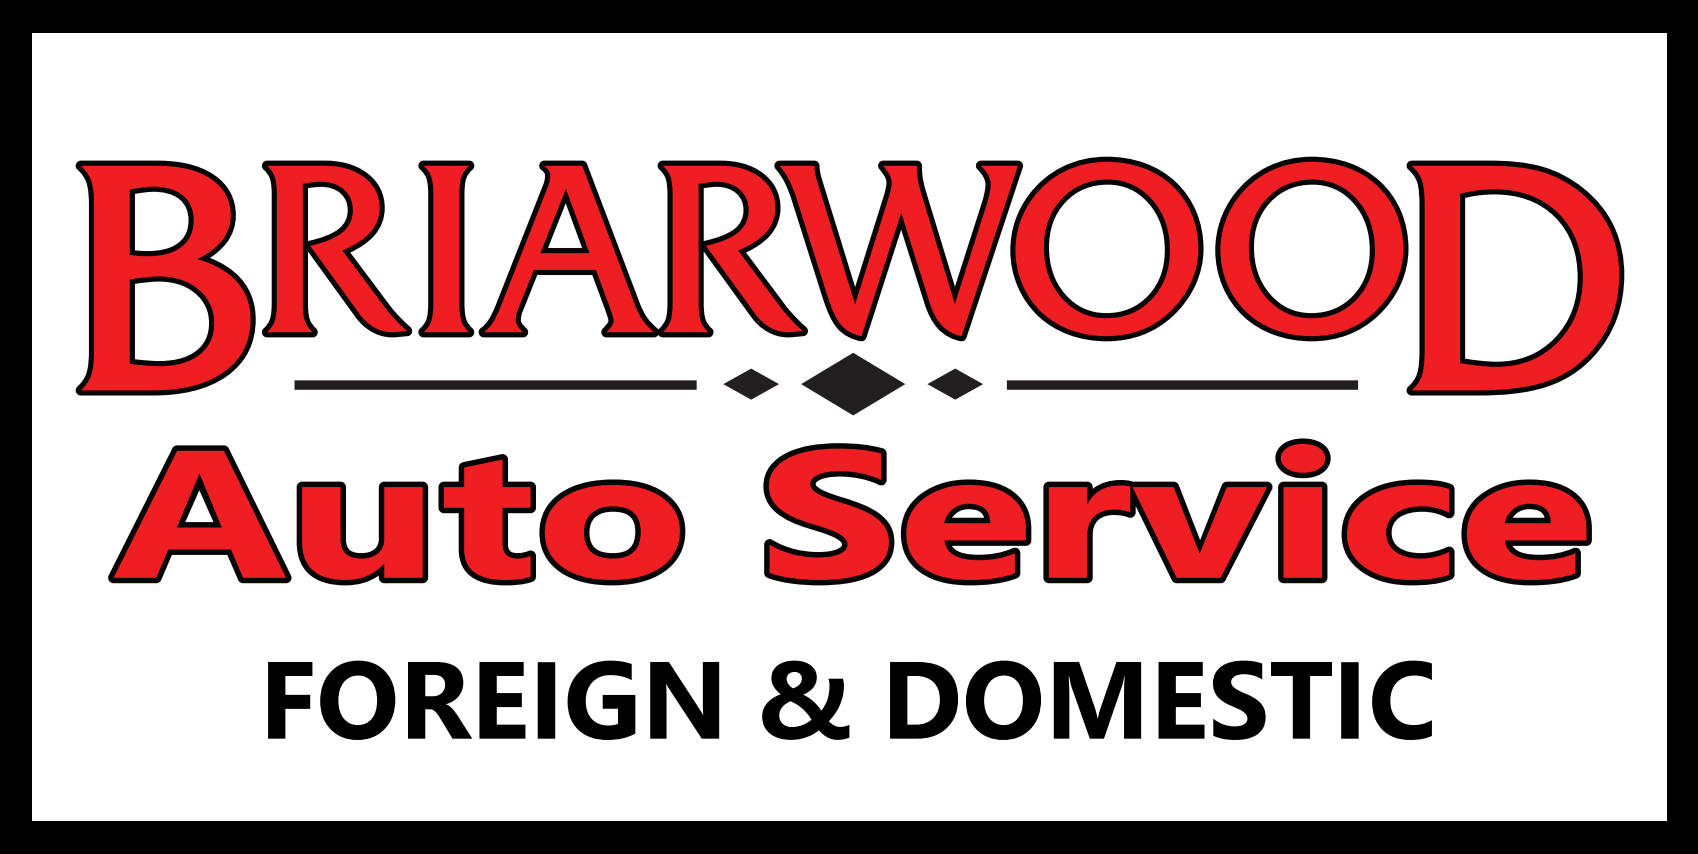 Briarwood Auto Service